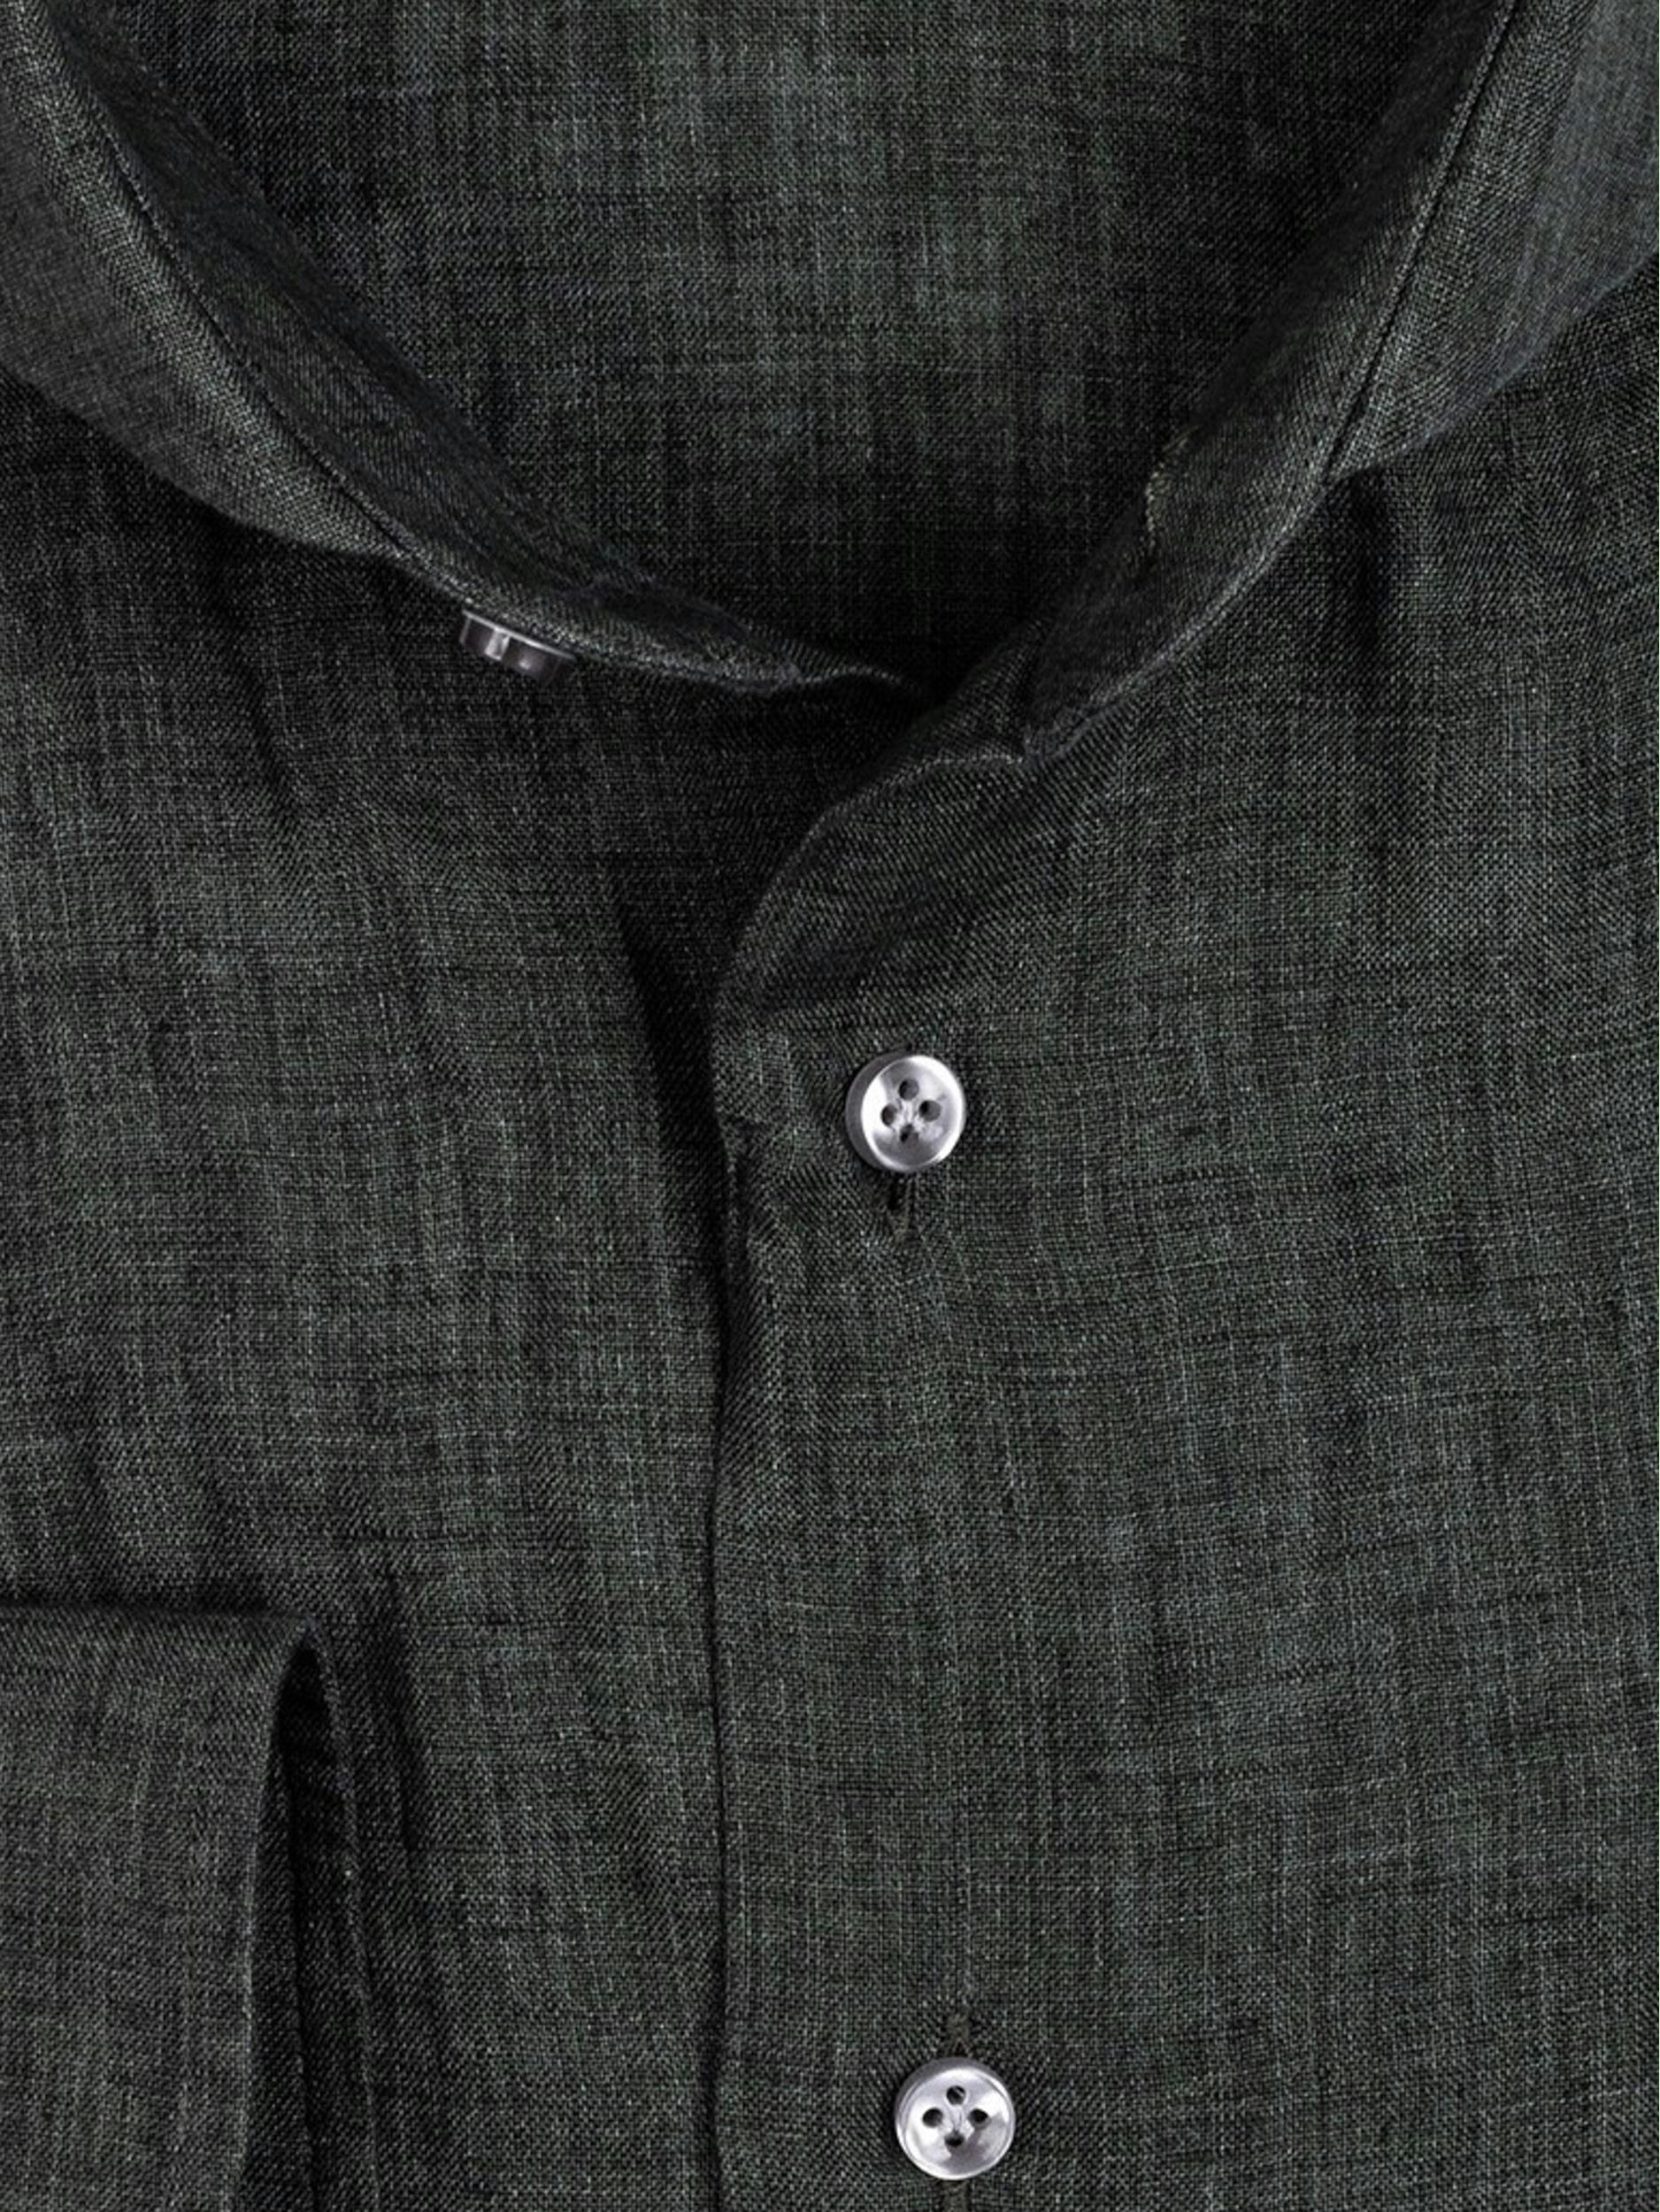 Thomas Maine Casual hemd lange mouw Groen Bari - Cutawau Collar 117757/78